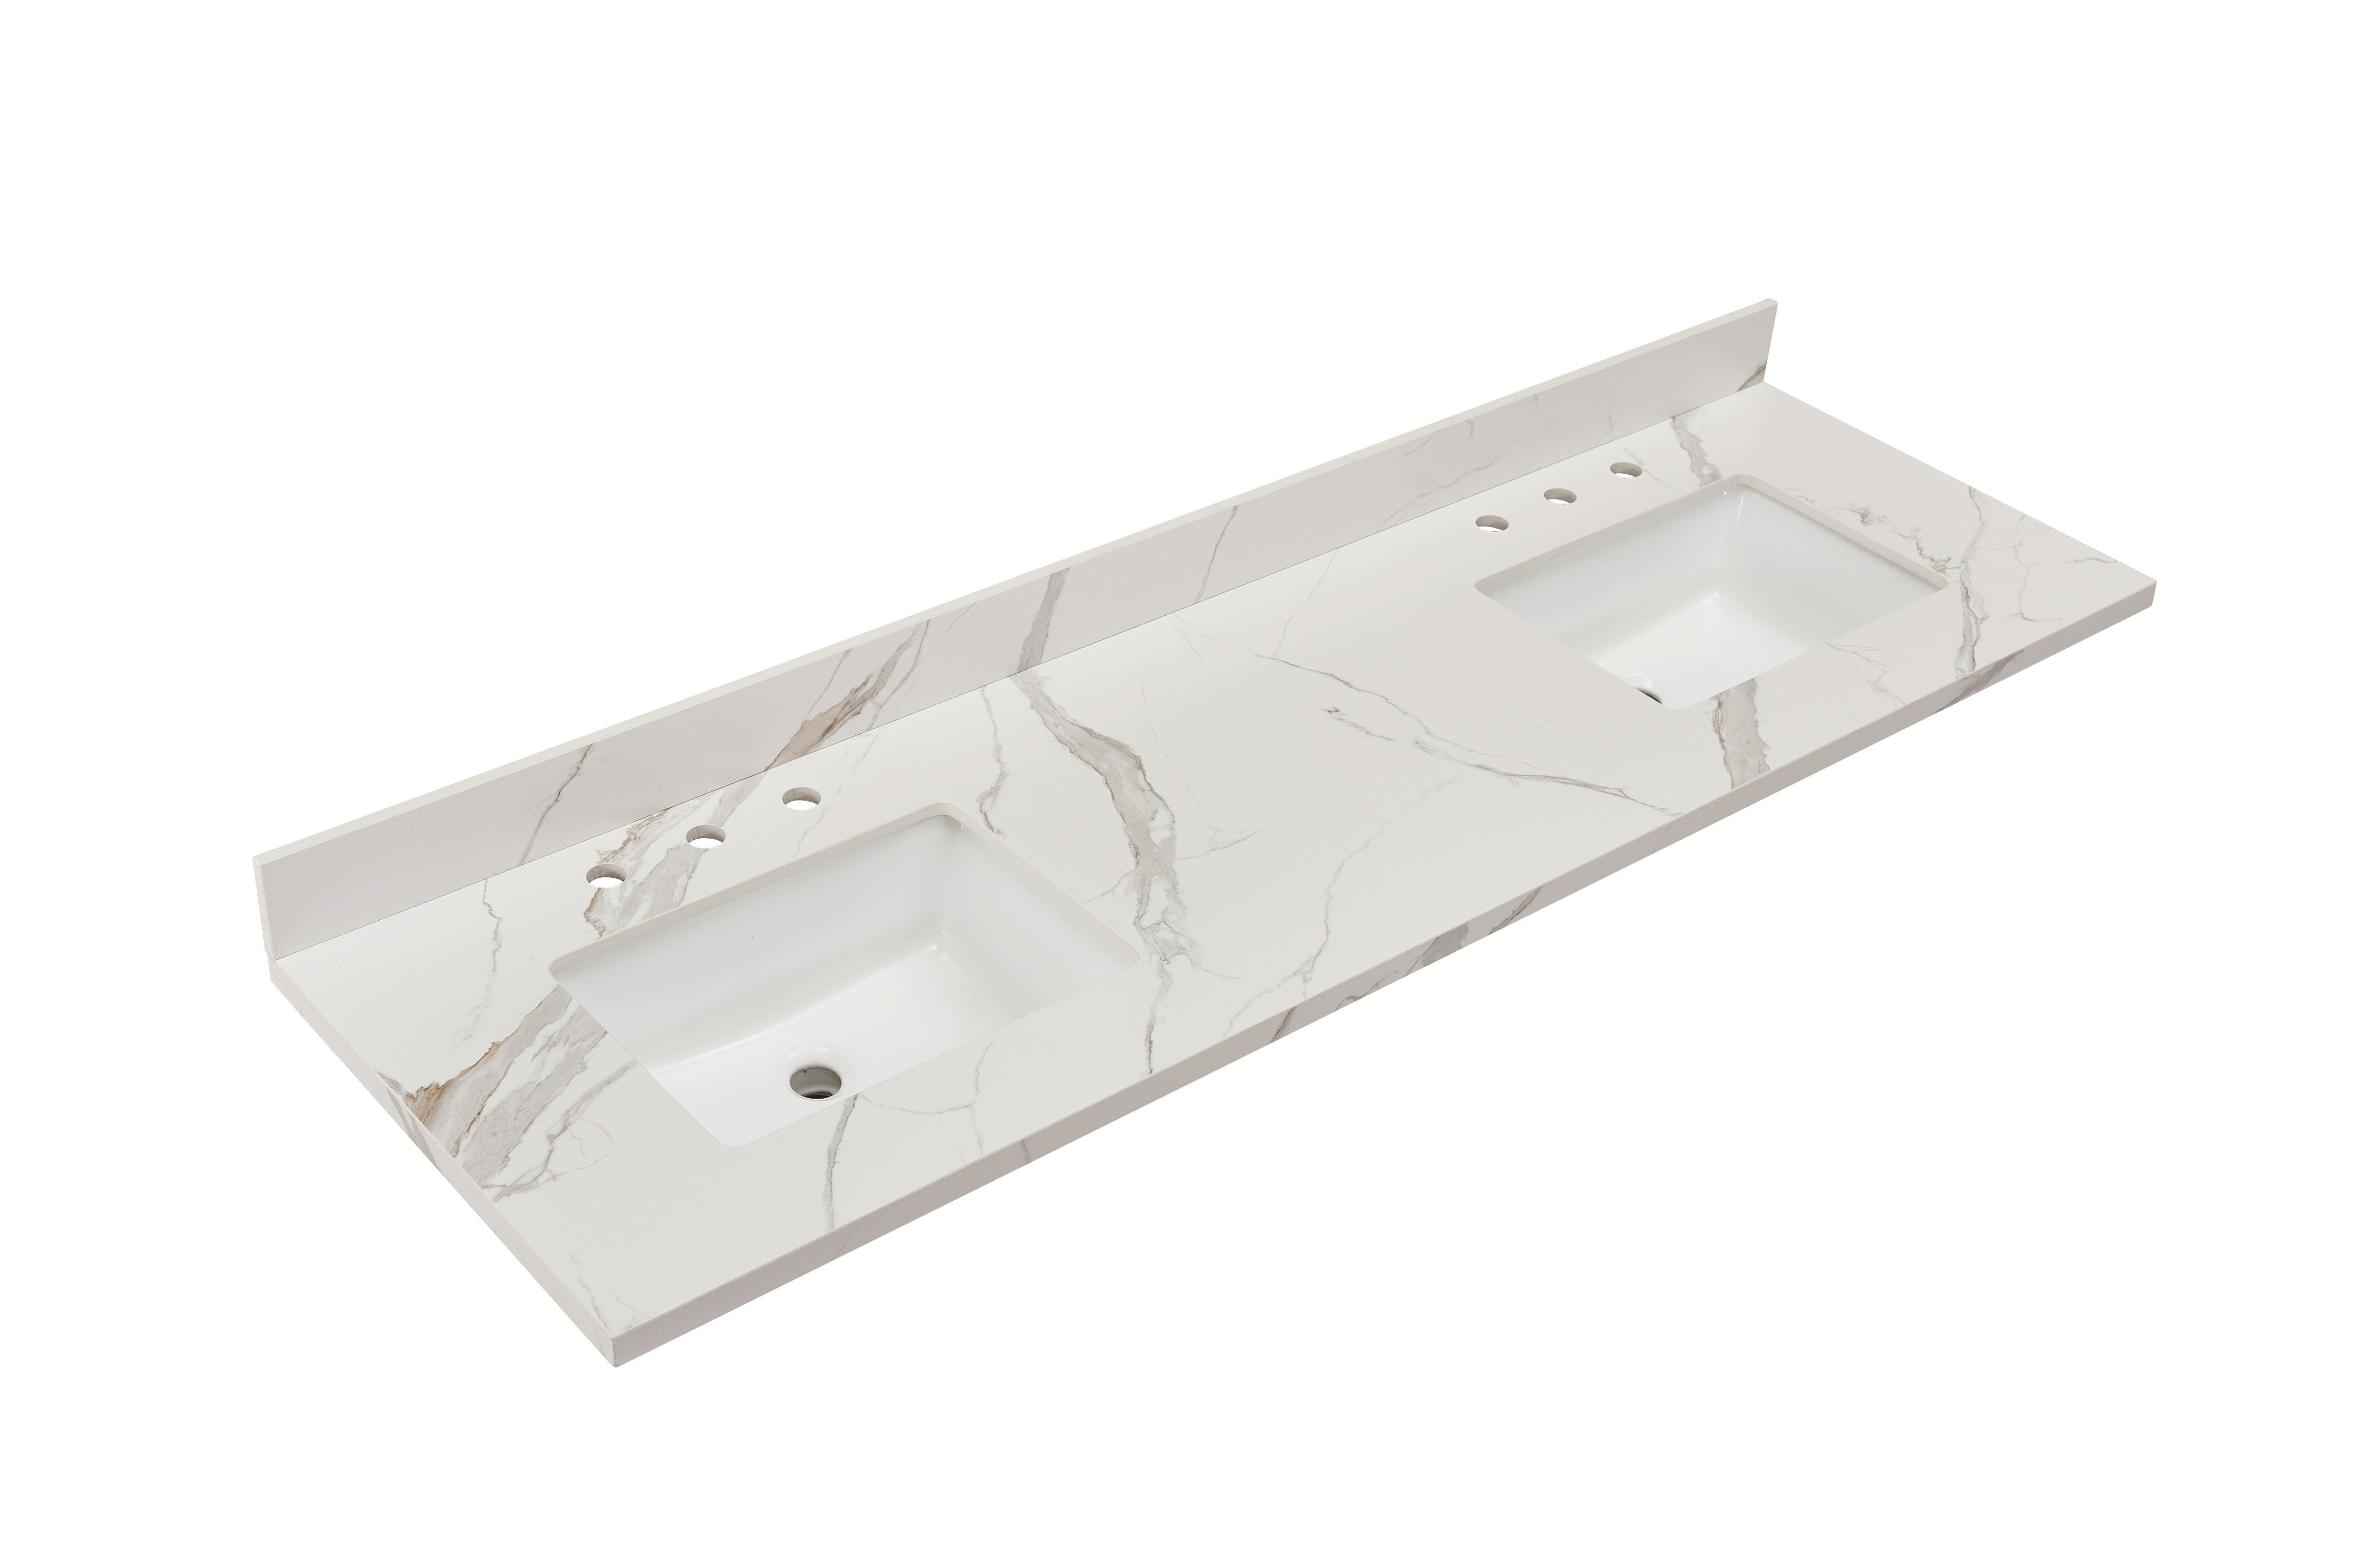 Eivissia Double Sink Bathroom Vanity Countertop in Calacatta White